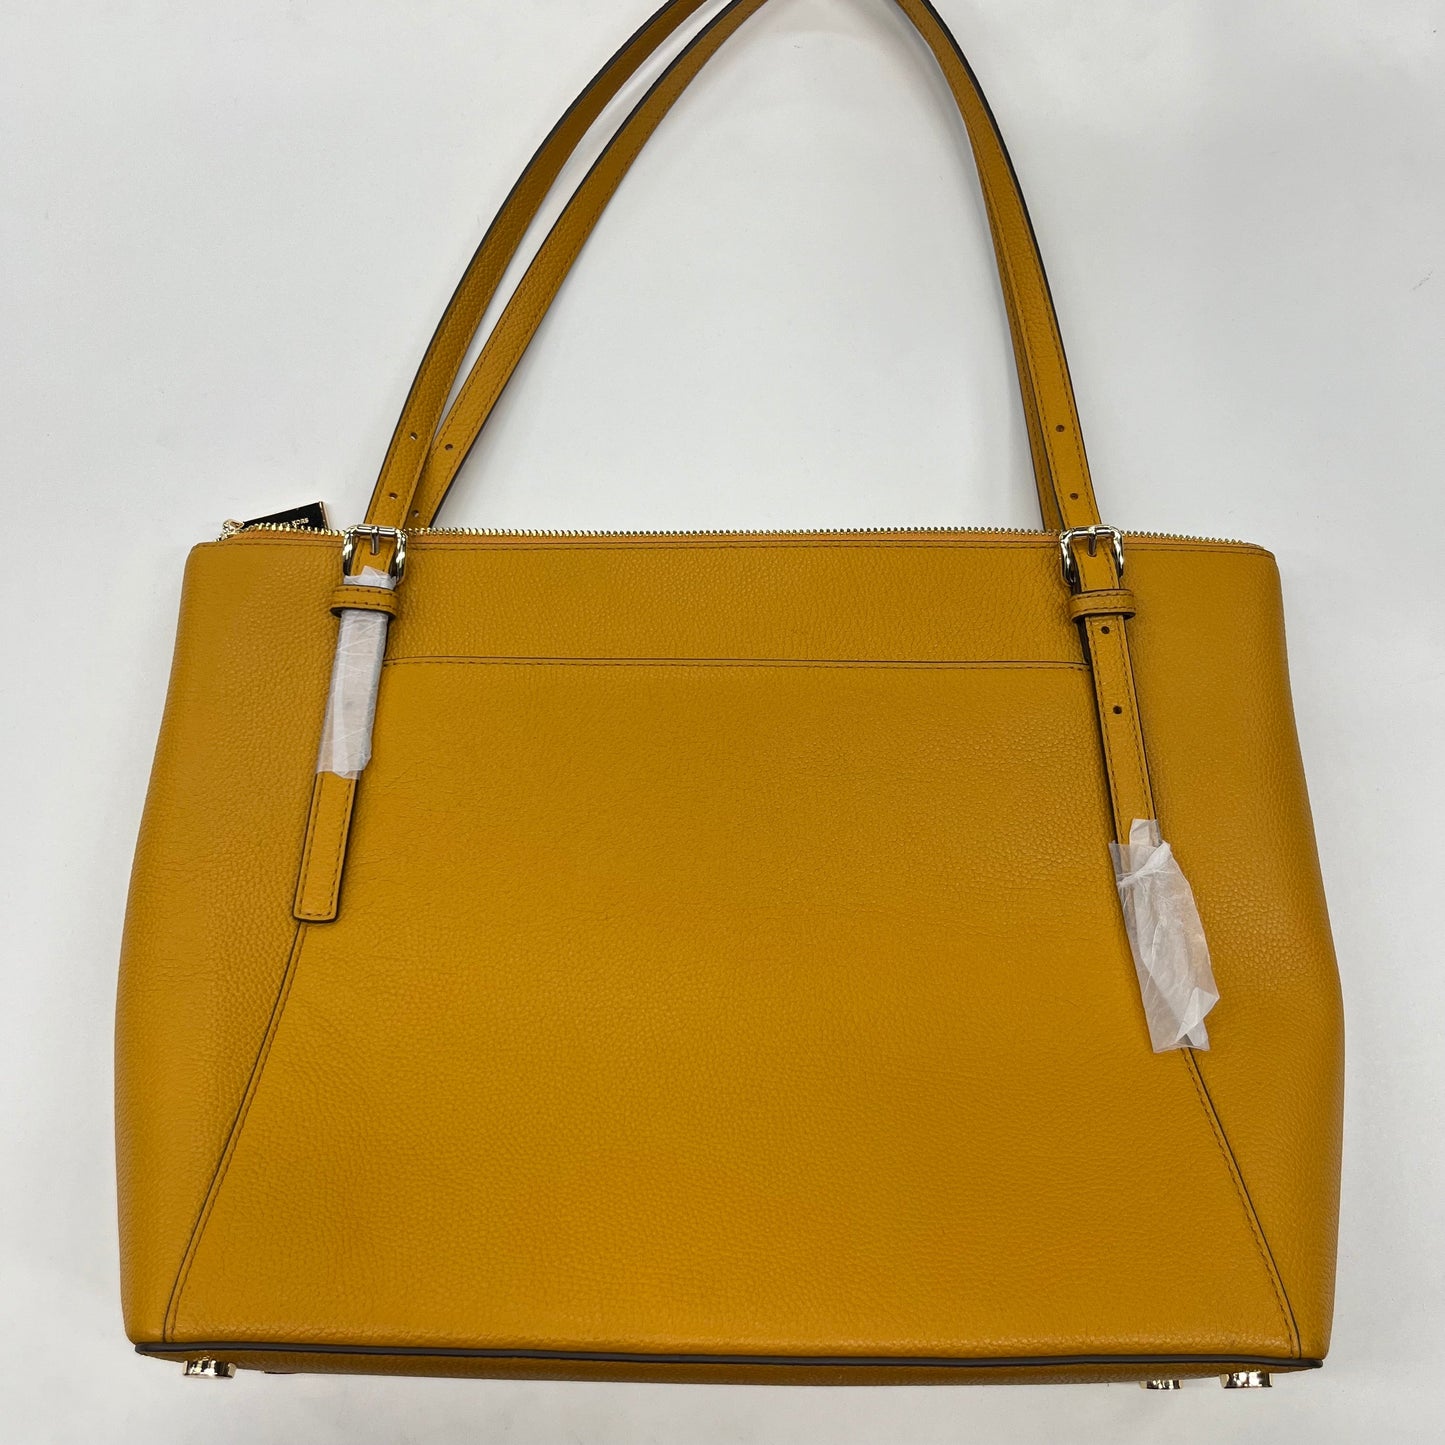 Handbag Designer Michael Kors NWT, Size Large